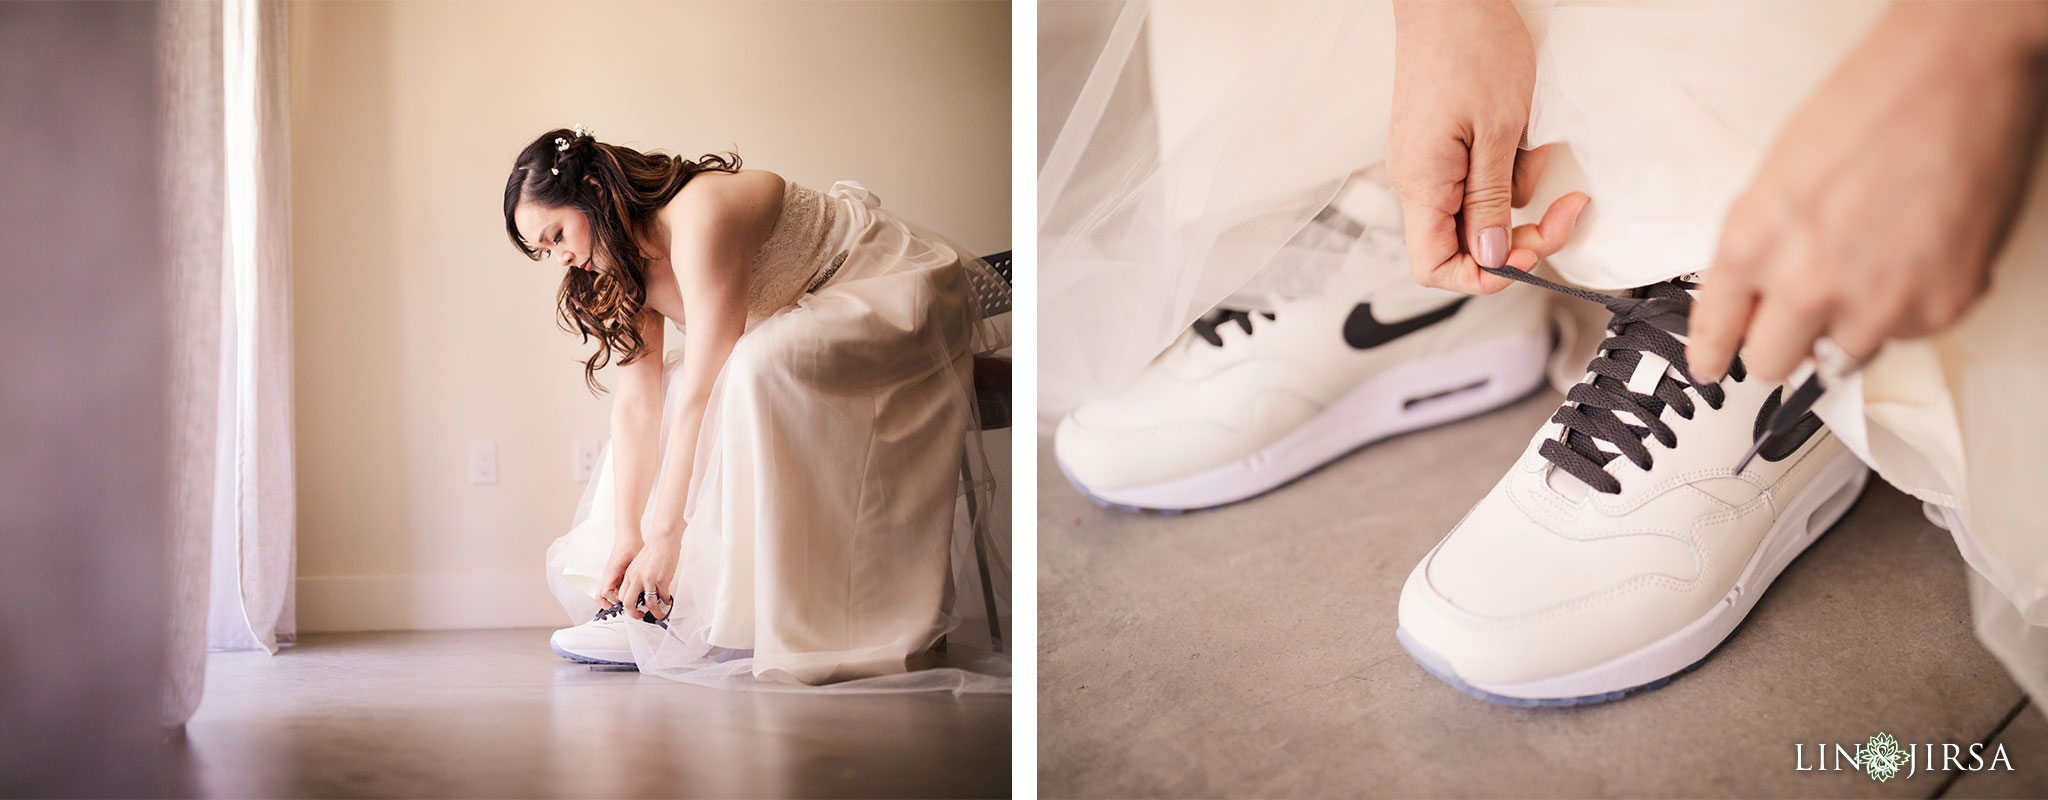 02 pasadena bride shoes nikes wedding reception photography